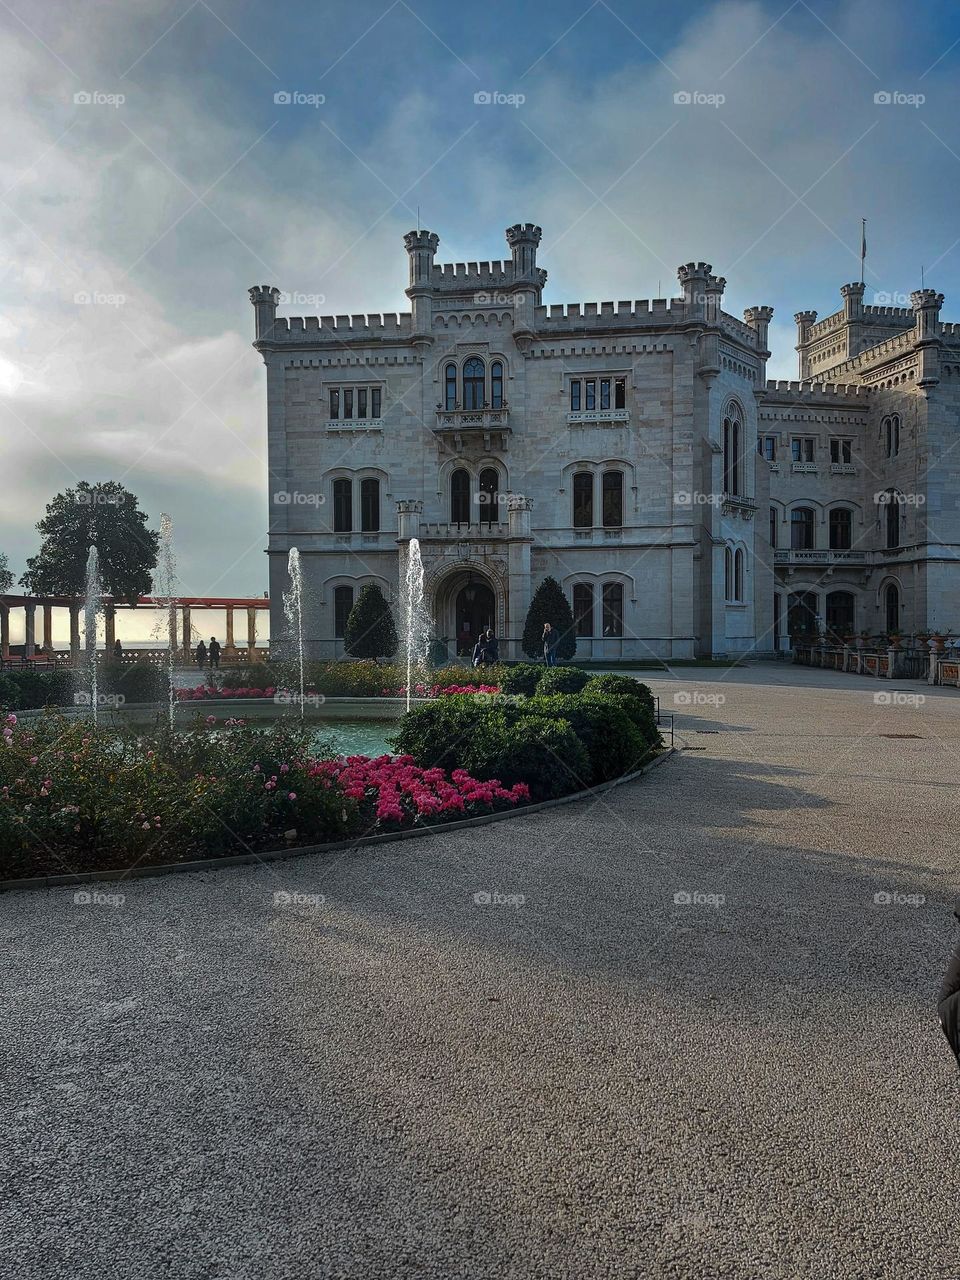 Miramare castle, Italy. <3